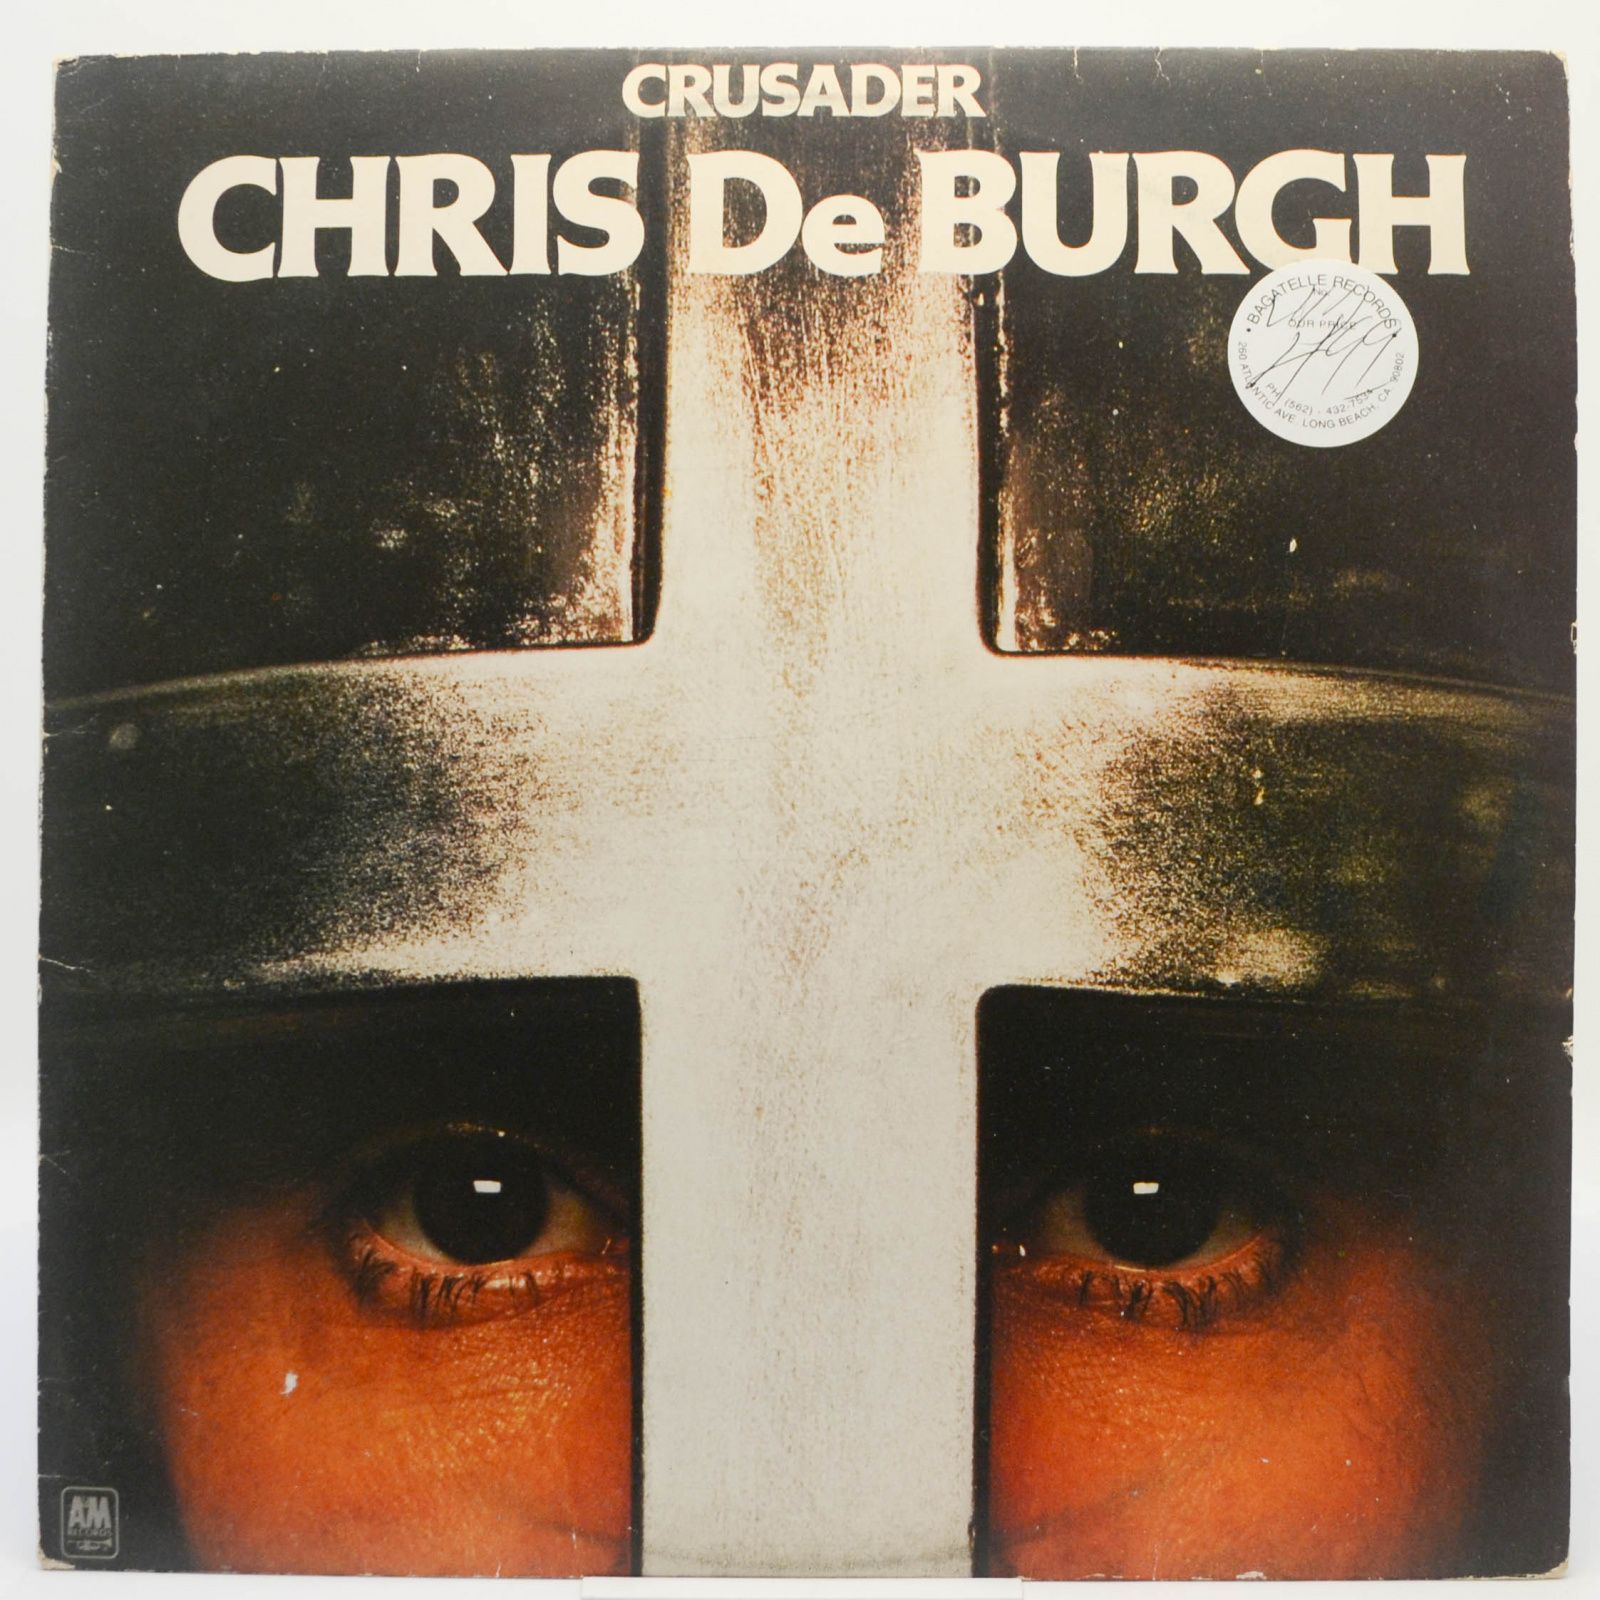 Chris de Burgh — Crusader, 1979